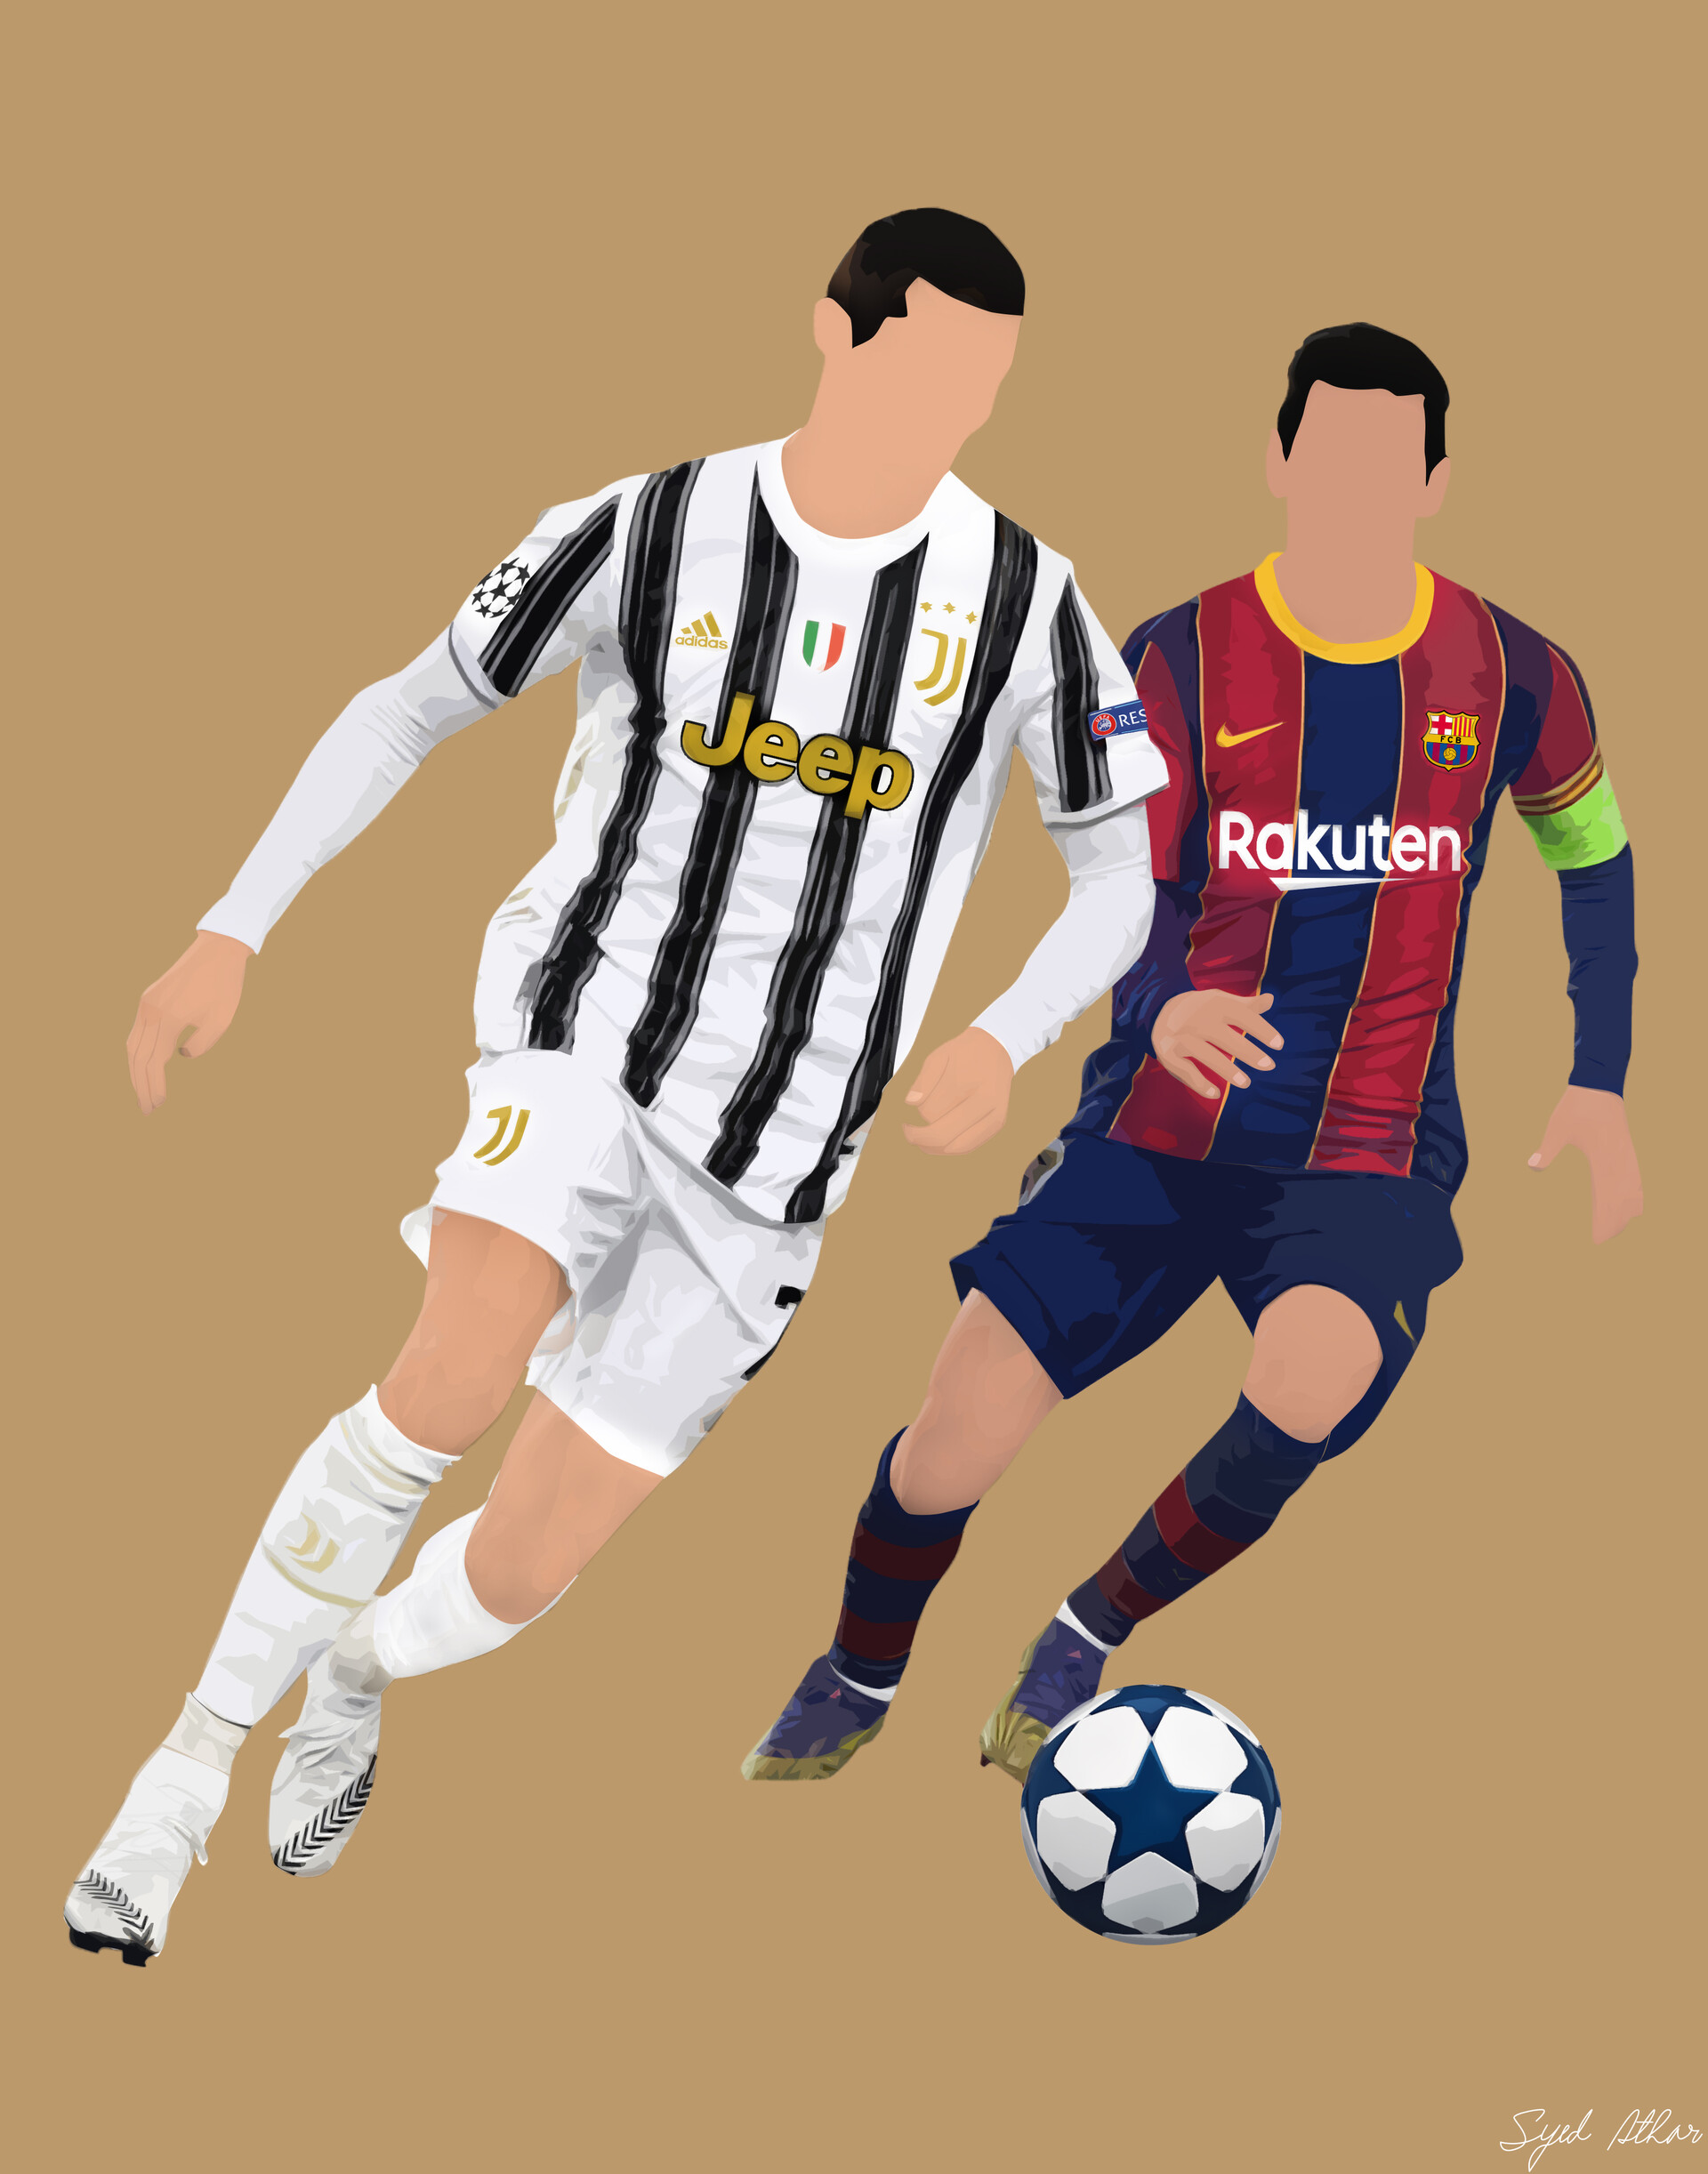 World Cup 2014 Drawing: Messi, Ronaldo, and Neymar